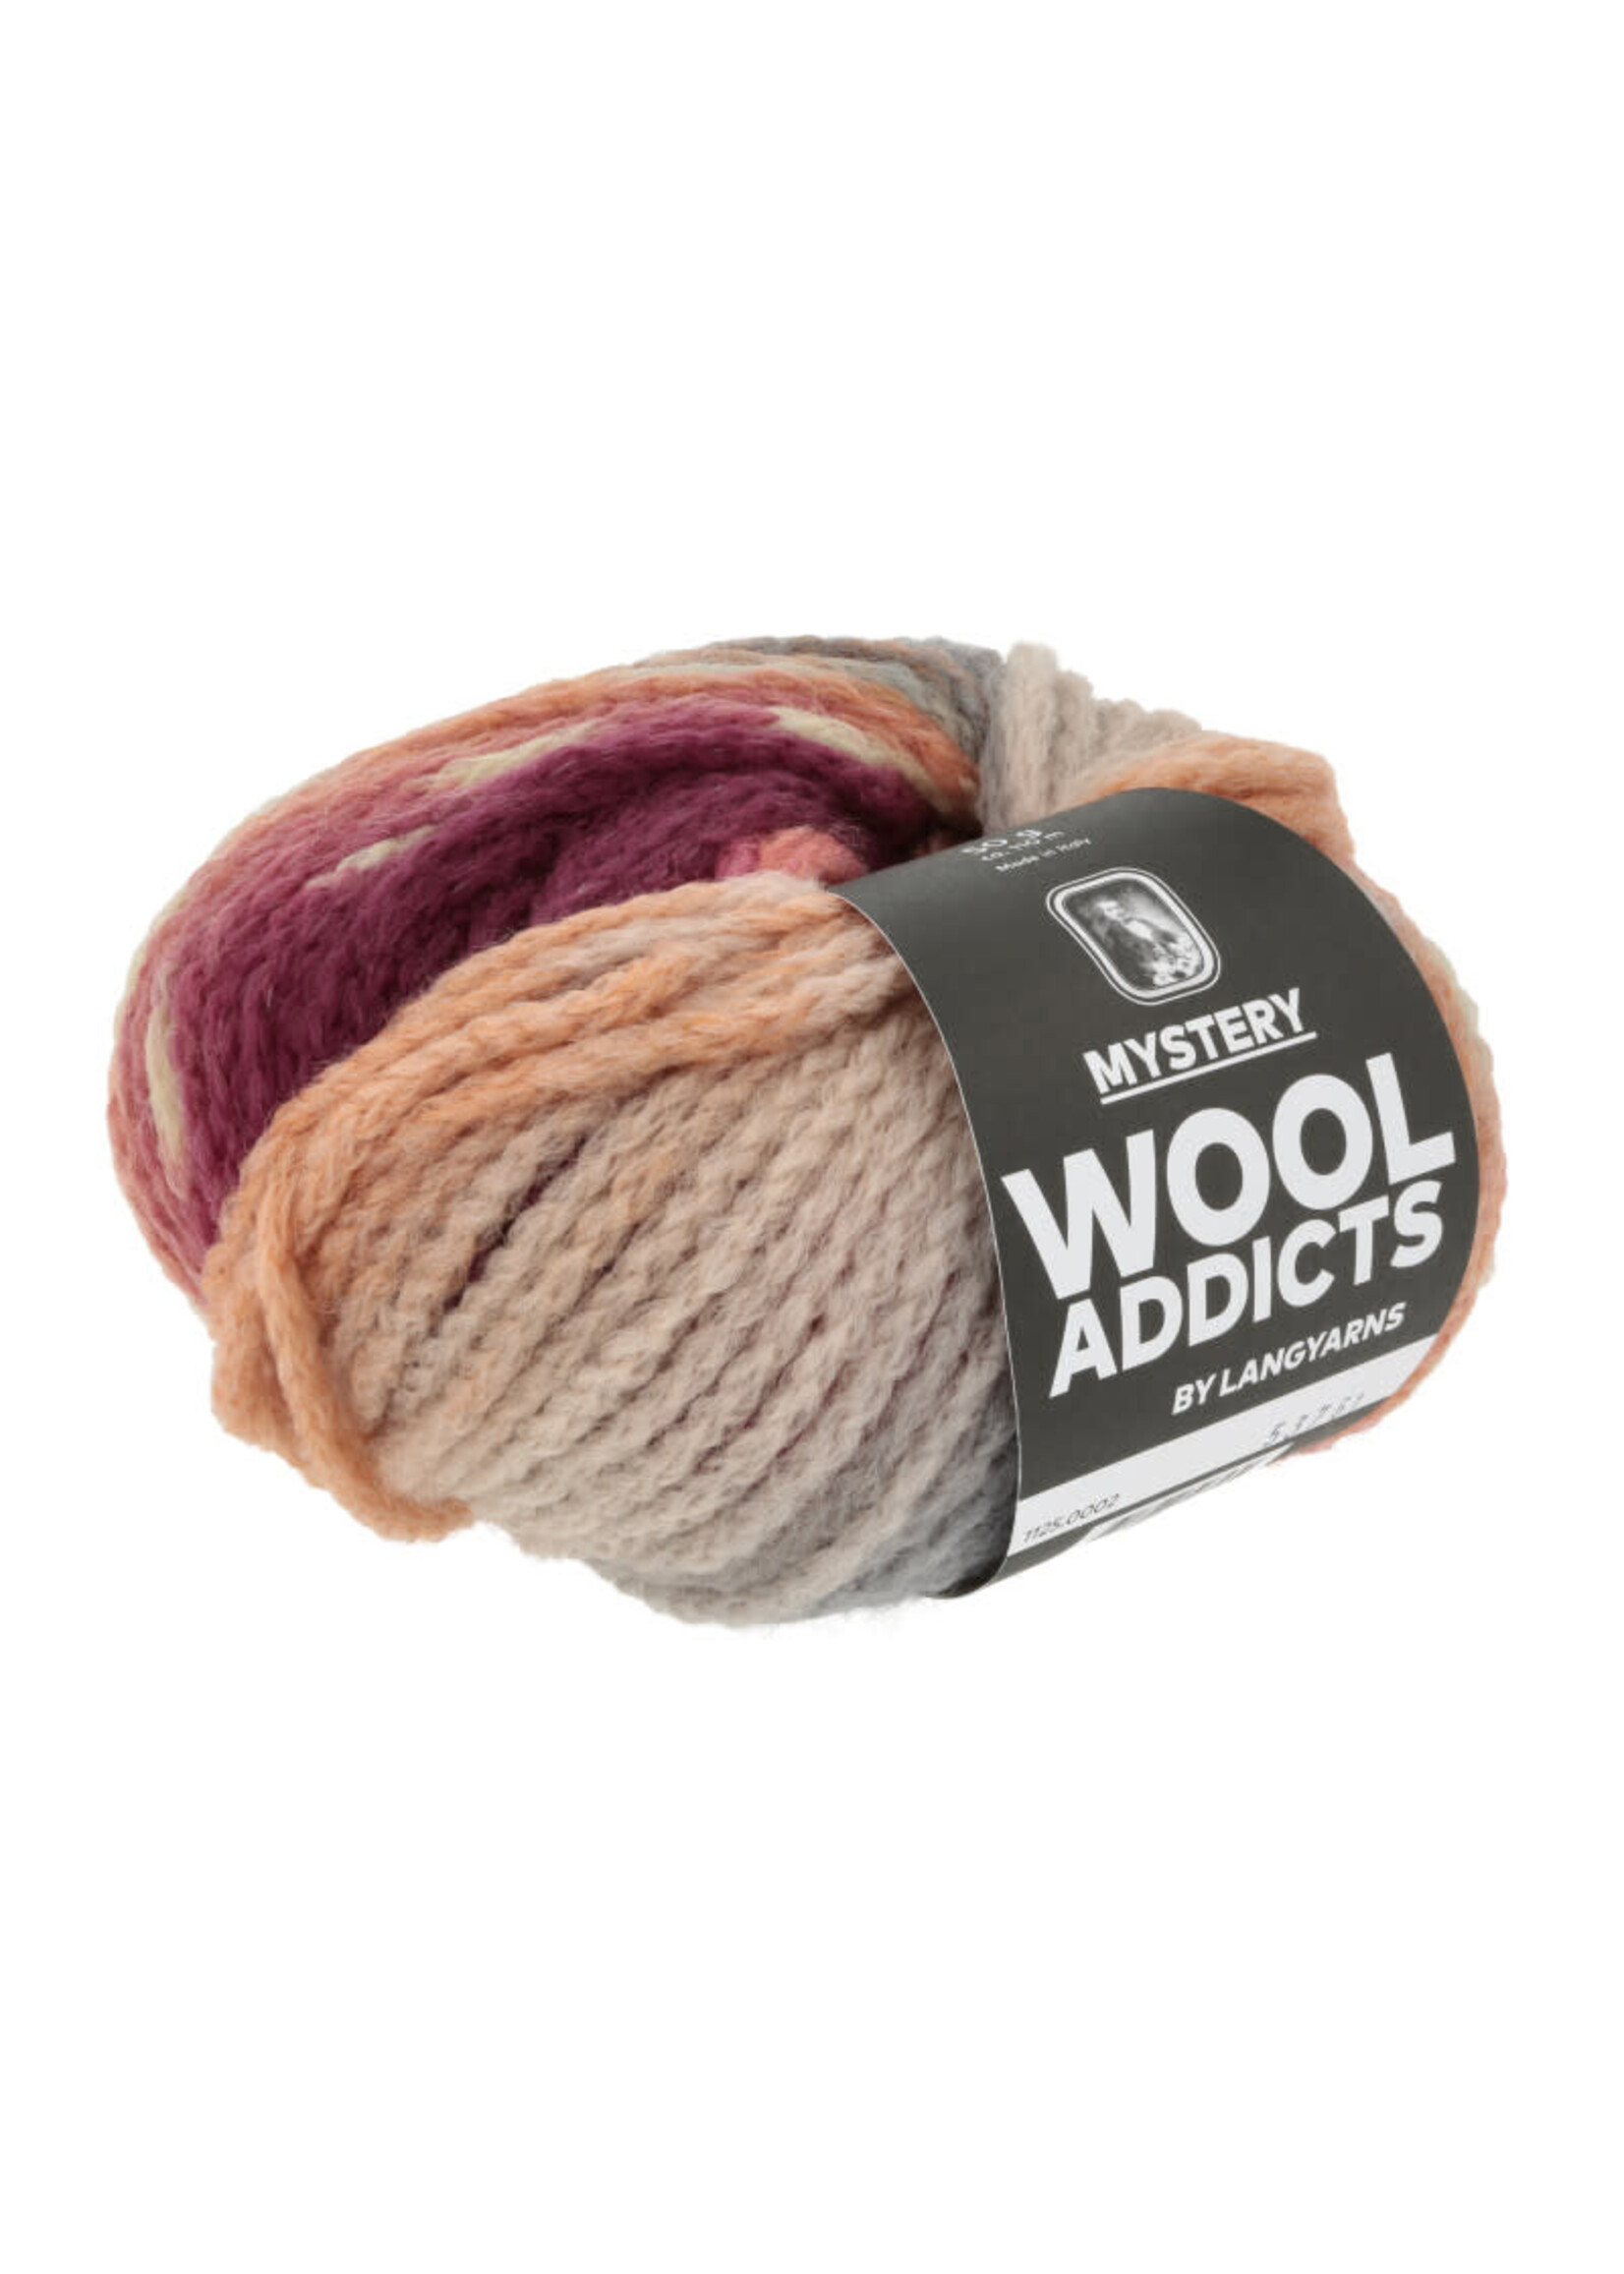 WoolAddicts Mystery - 0002